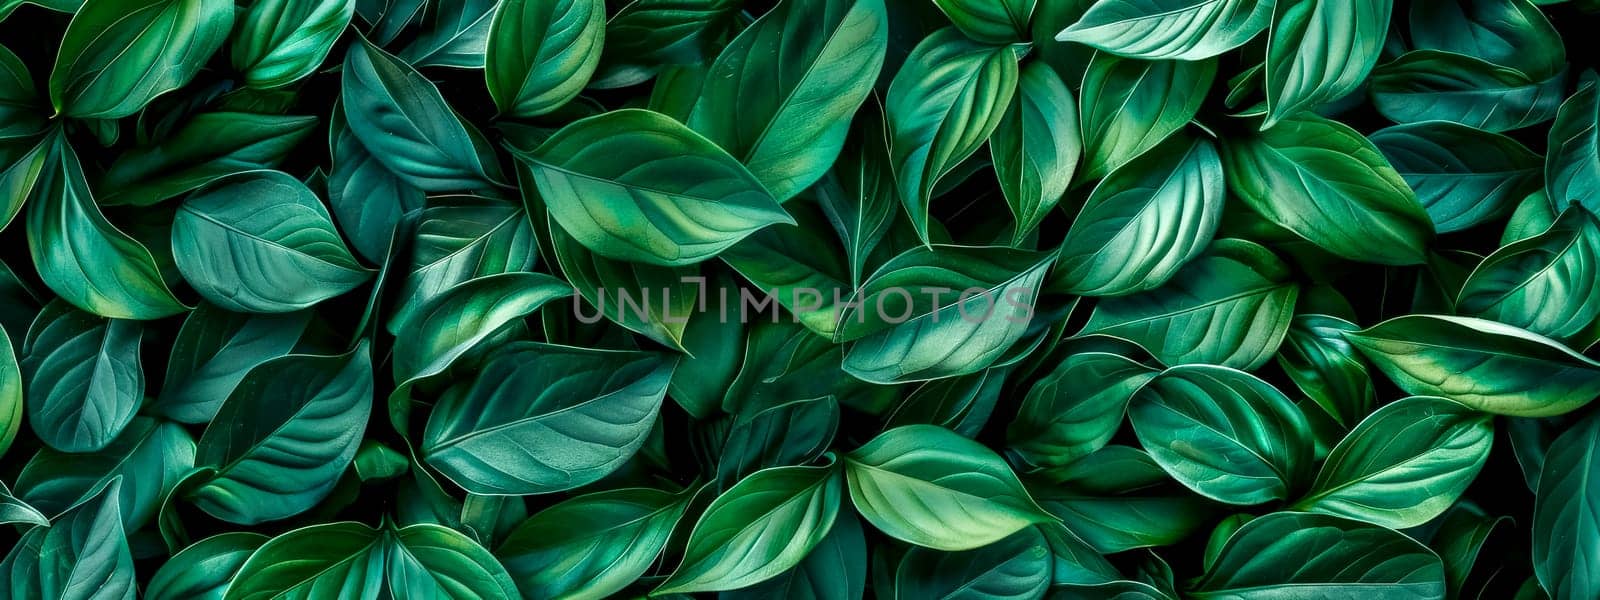 Lush greenery: vibrant leaf pattern texture by Edophoto